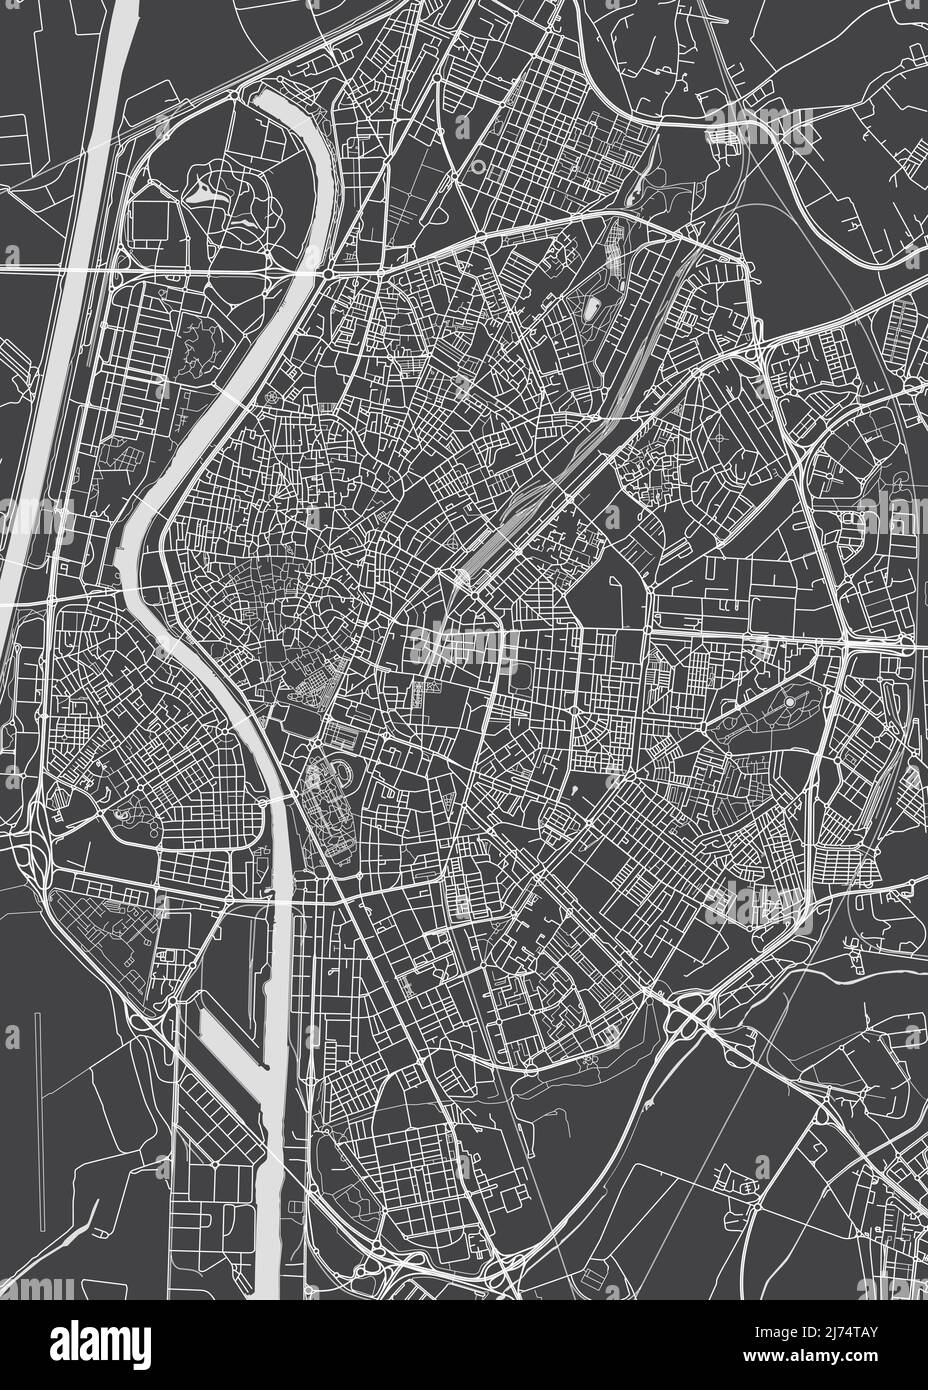 Stadtplan Sevilla, monochromer Detailplan, Vektorgrafik Stock Vektor